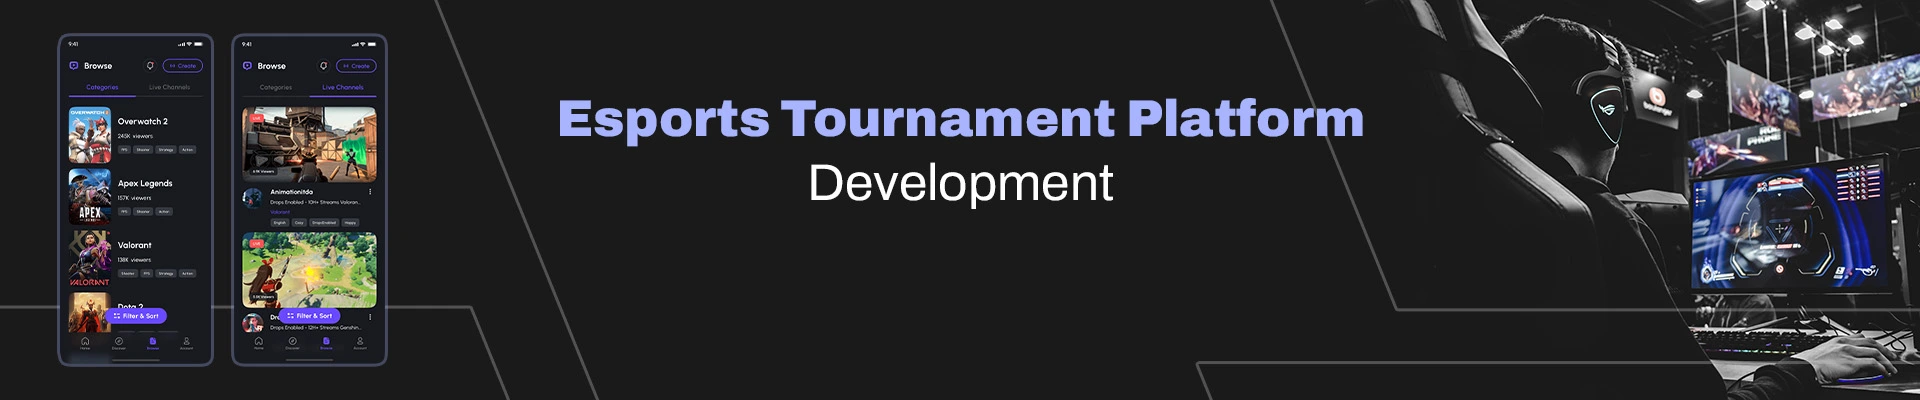 eSports Tournament Platform